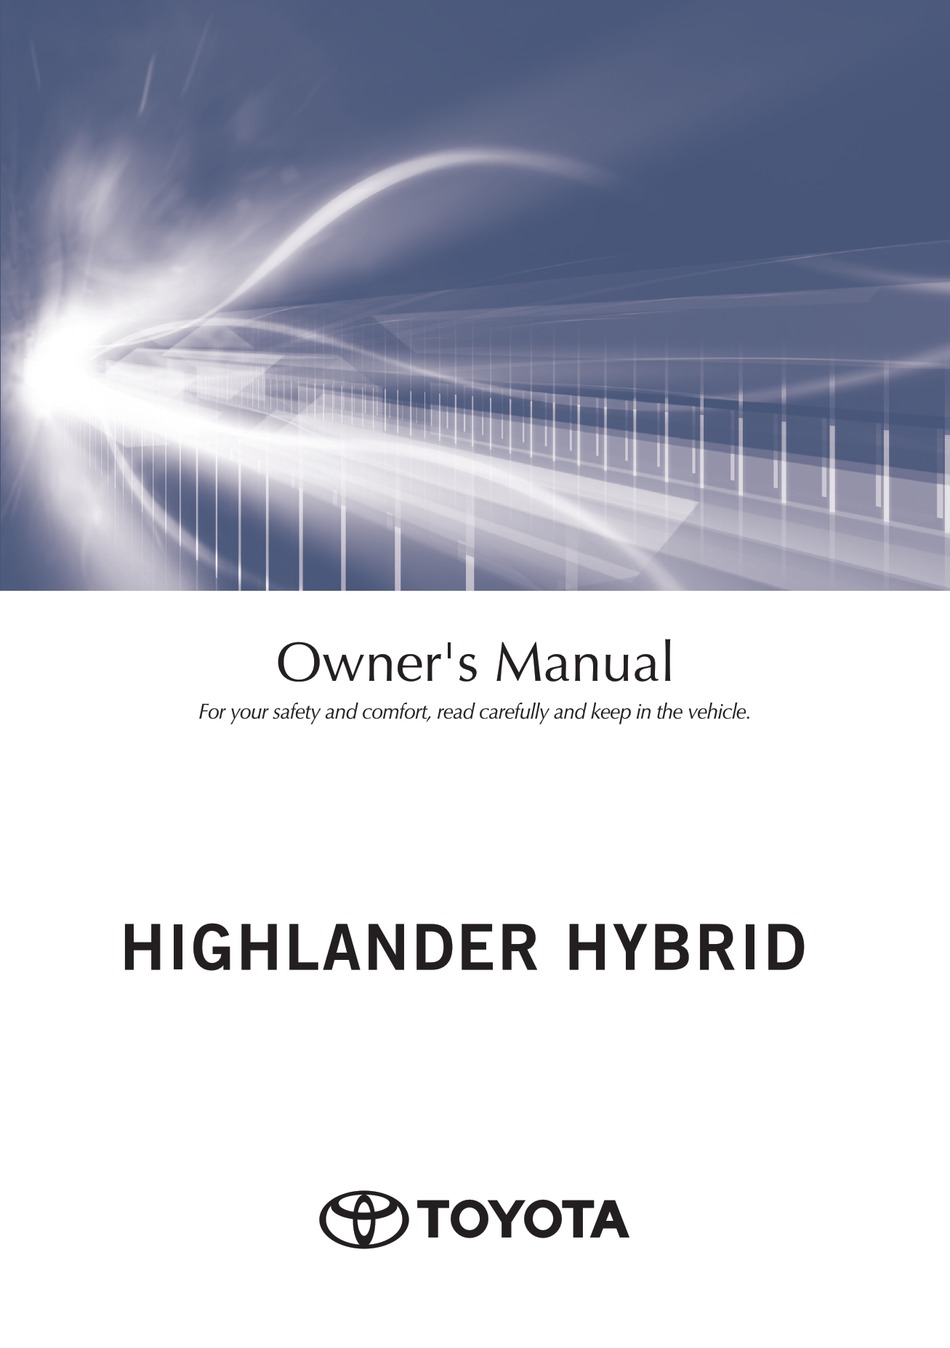 TOYOTA HIGHLANDER HYBRYD OWNER'S MANUAL Pdf Download ManualsLib